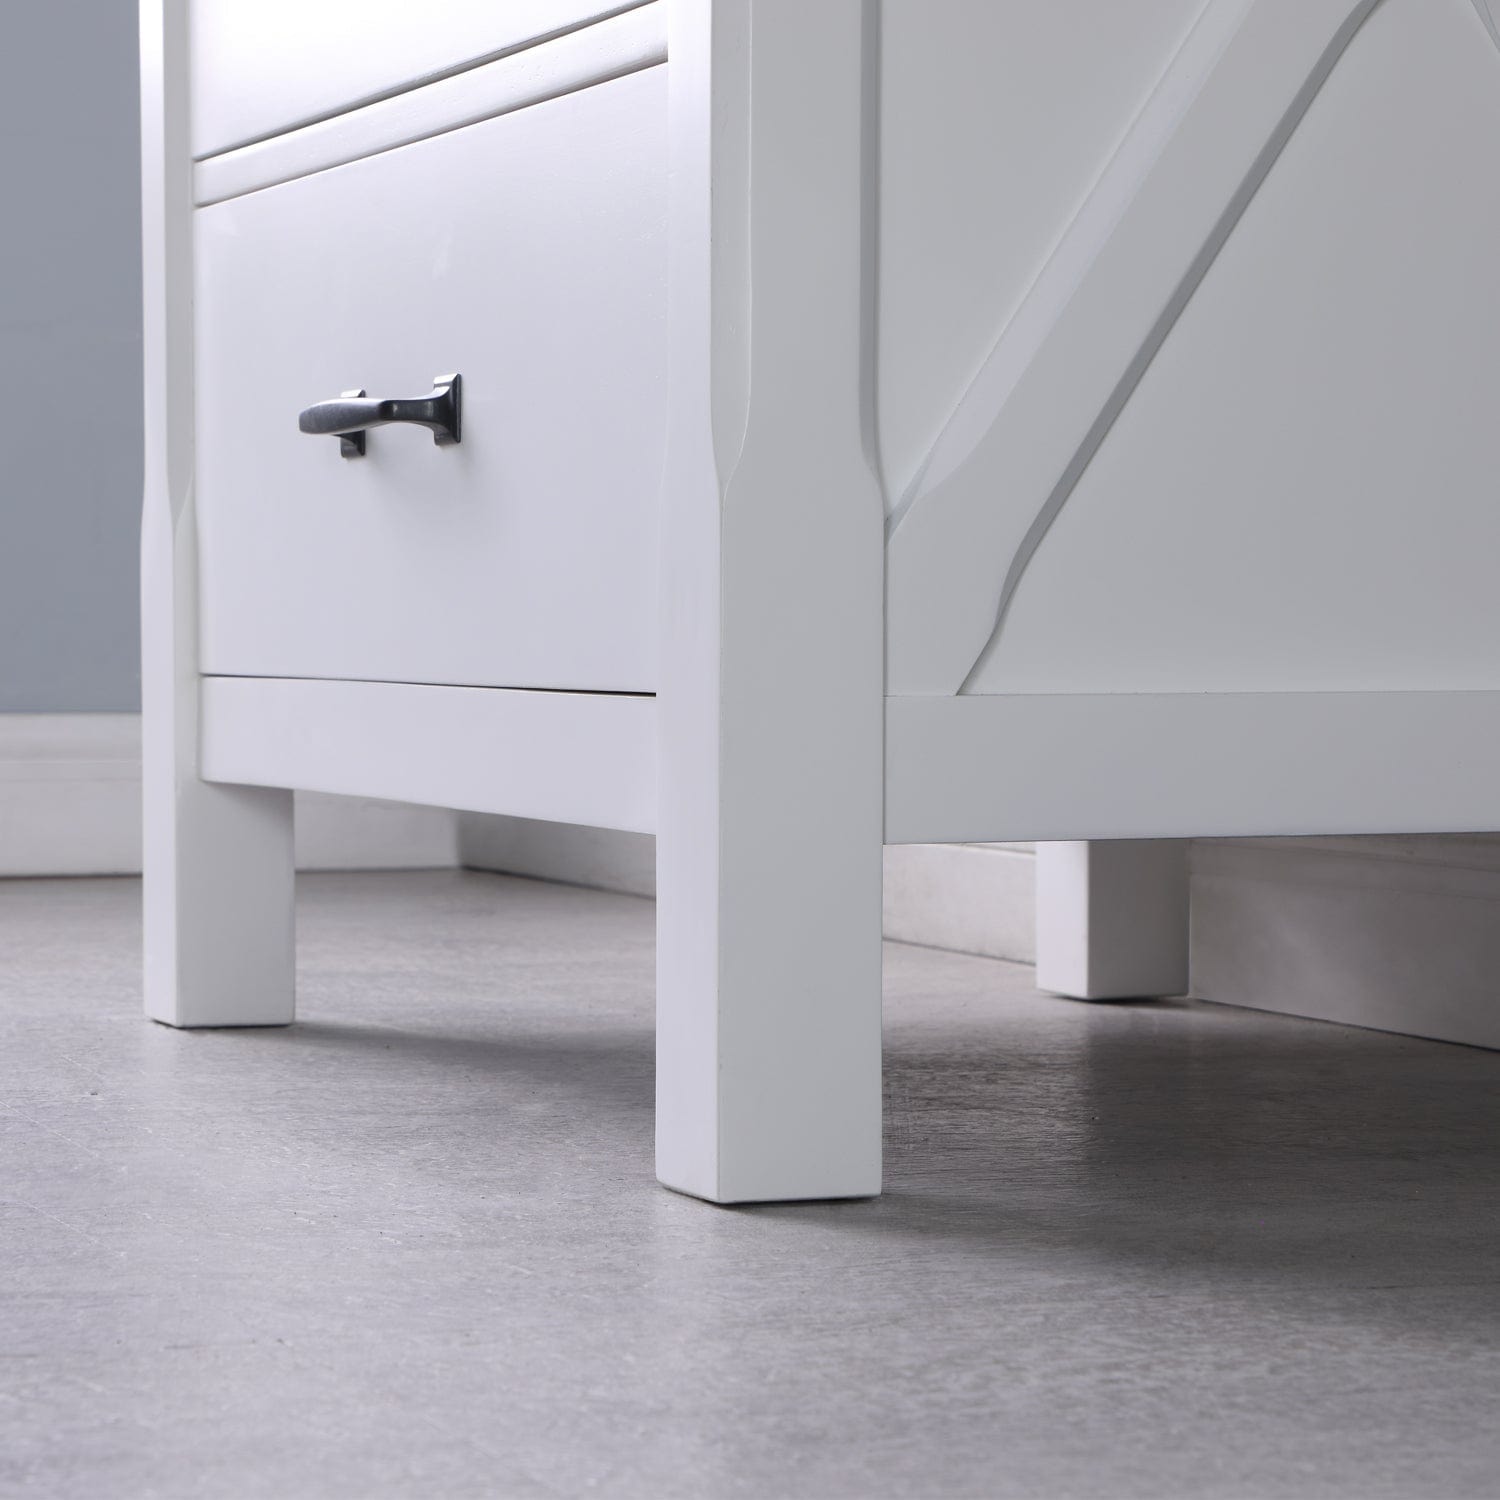 Altair Maribella 30" Single Bathroom Vanity Set in White and Carrara White Marble Countertop with Mirror 535030-WH-CA - Molaix631112970259Vanity535030-WH-CA